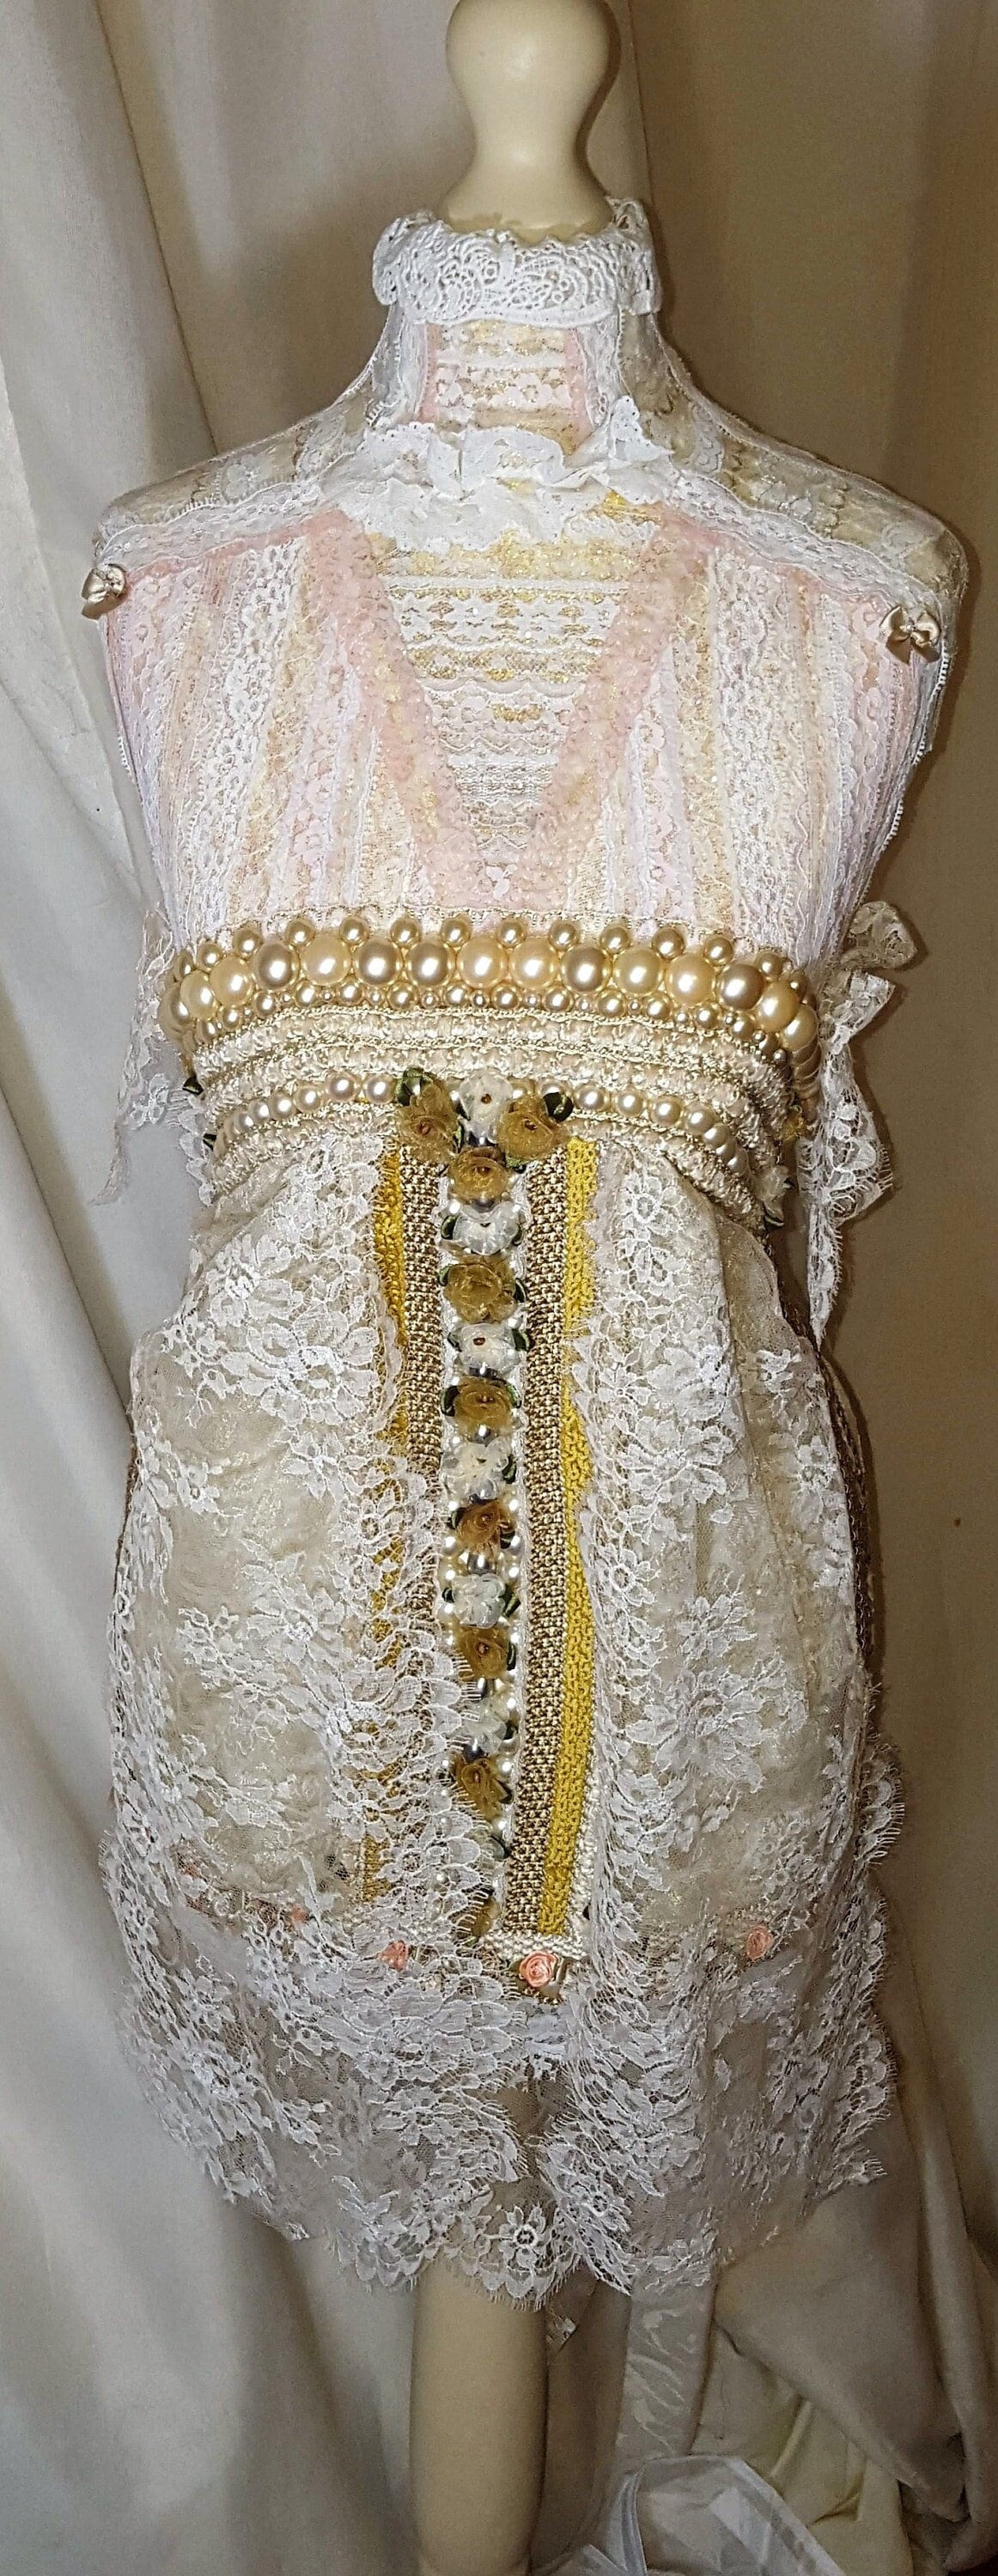 4 Piece Vintage Lace Linen Dress Mannequin Jewelry Display Set